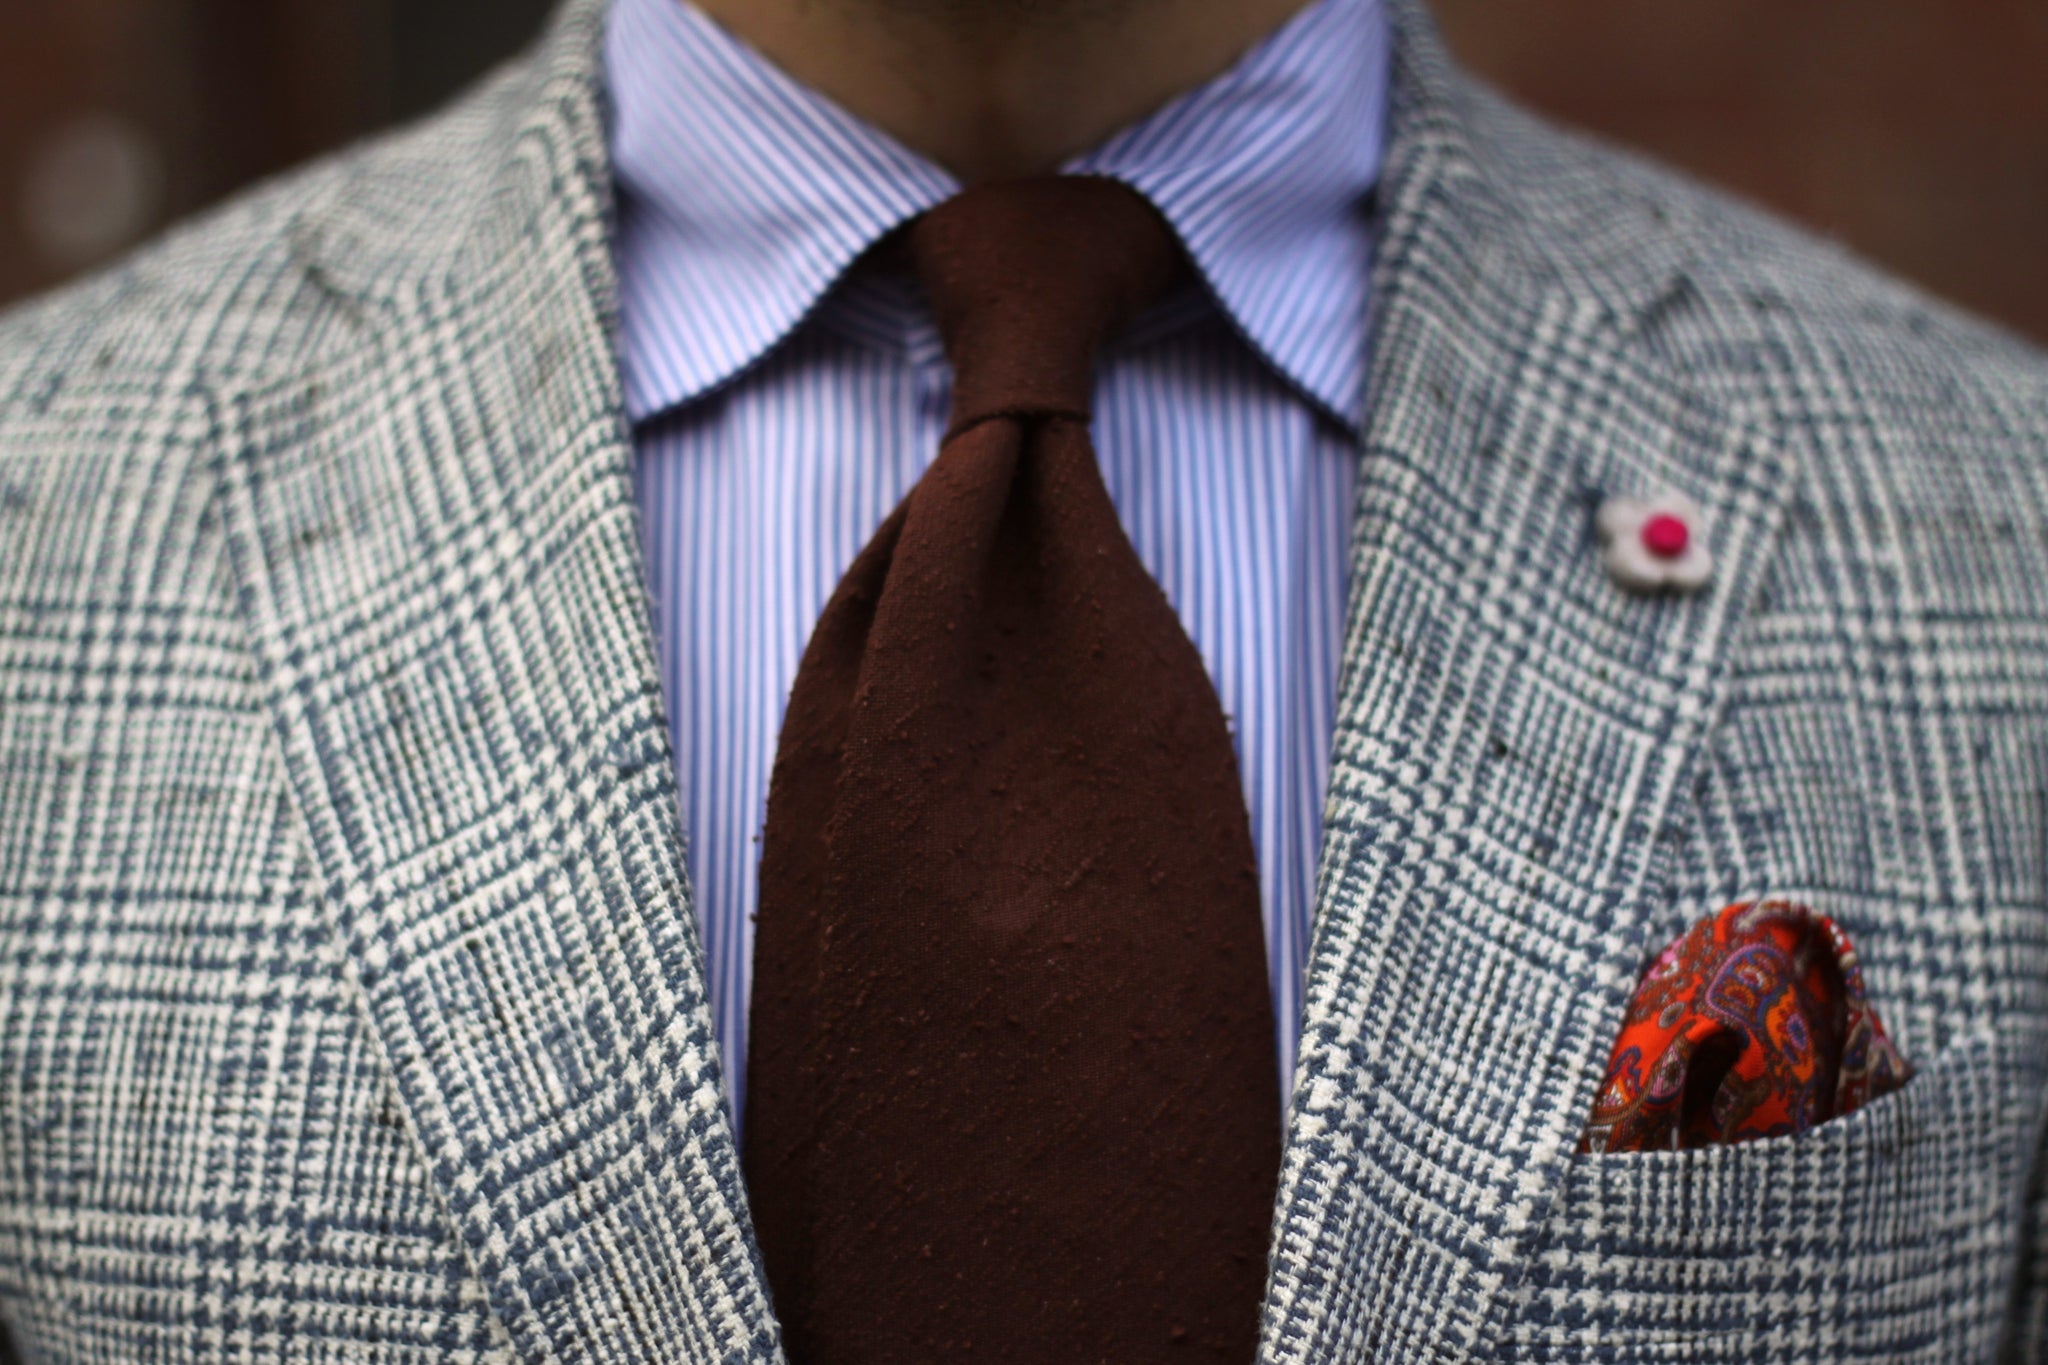 Shantung silk tie - between formal and casual